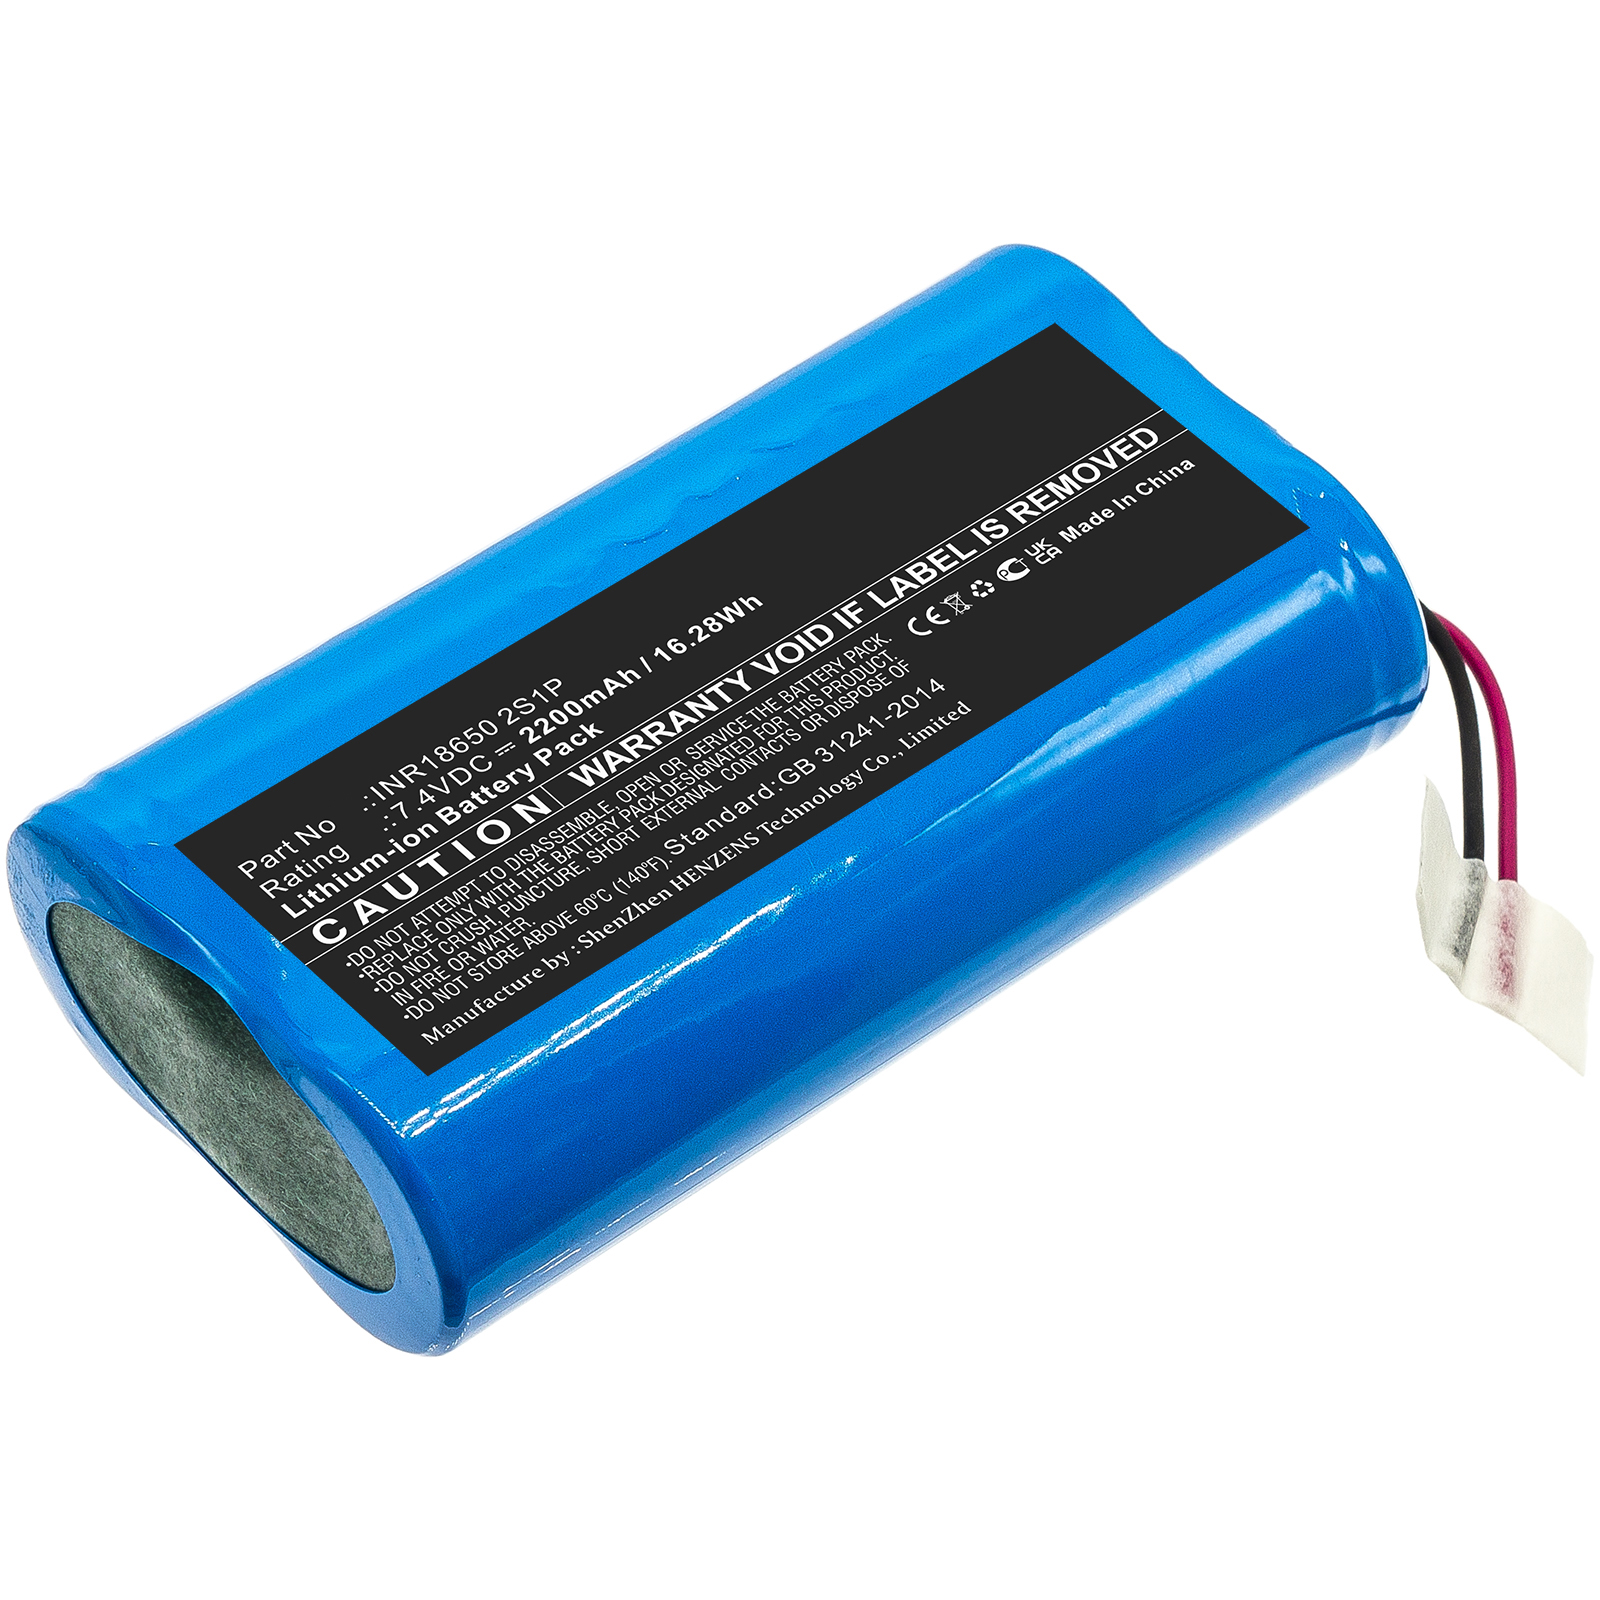 Synergy Digital Personal Care Battery, Compatible with CHI Escape INR18650 2S1P Personal Care Battery (Li-ion, 7.4V, 2200mAh)